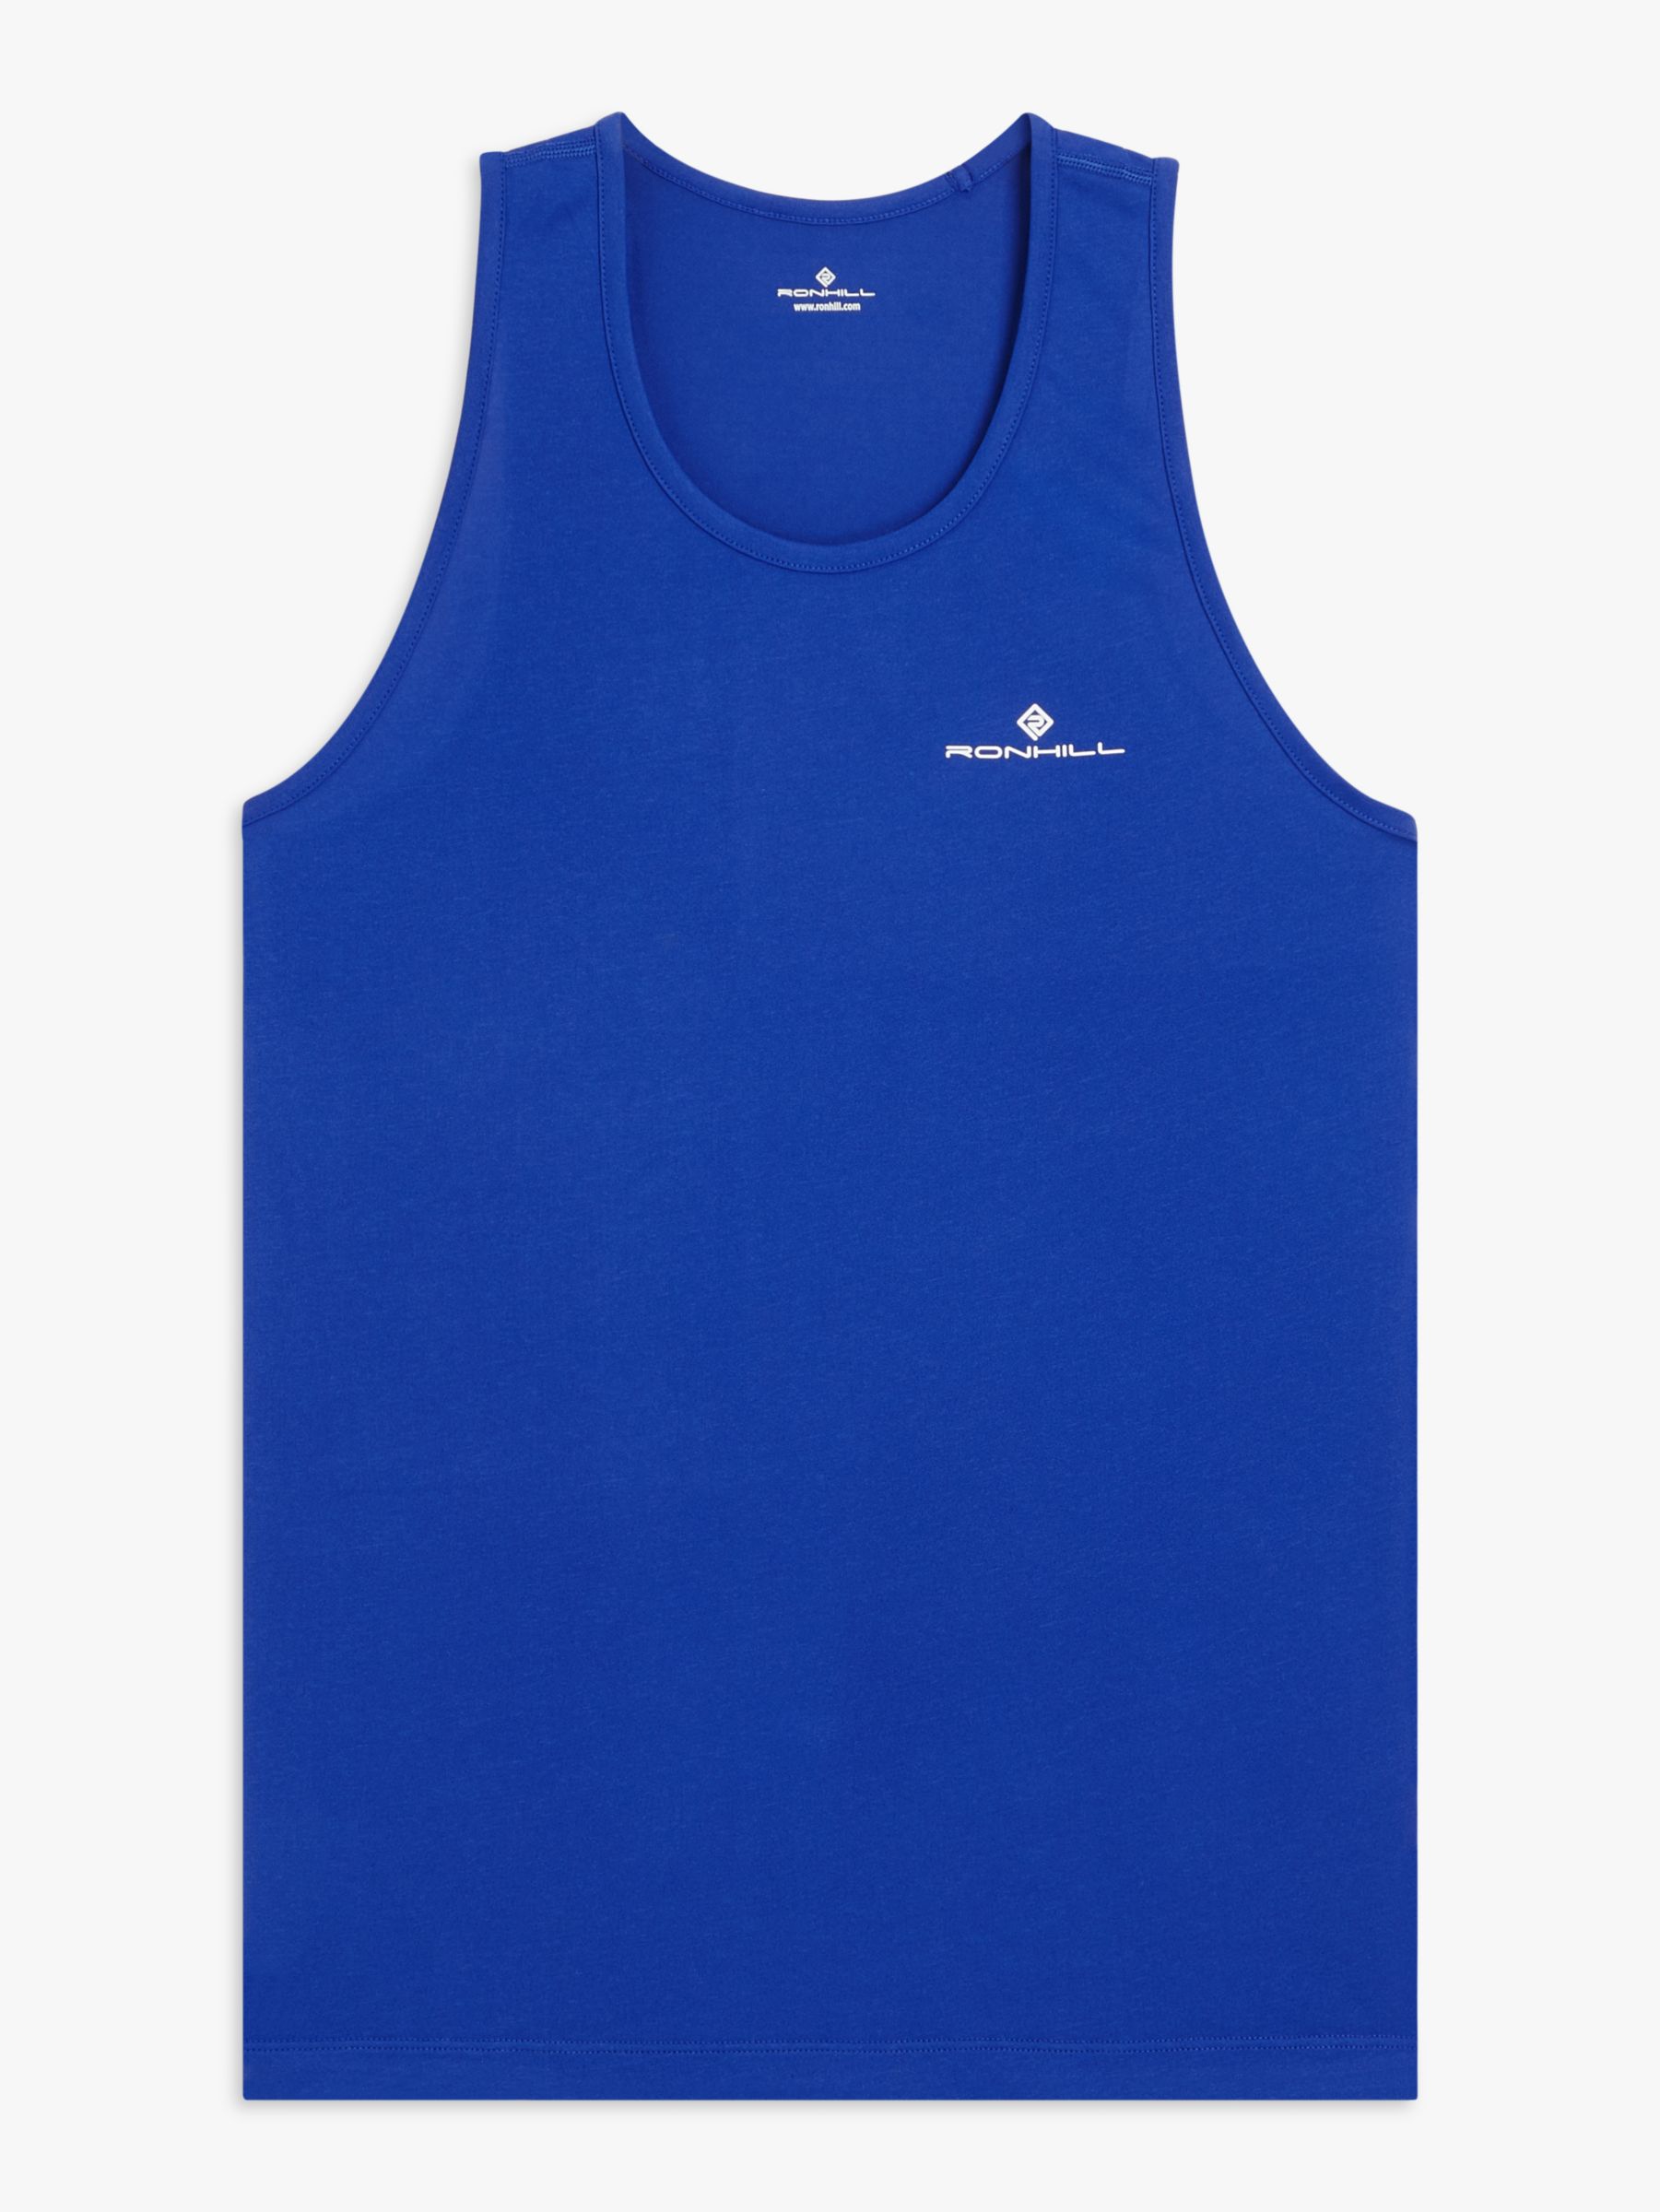 Ronhill Core Running Vest Top, Blue Cobalt, S